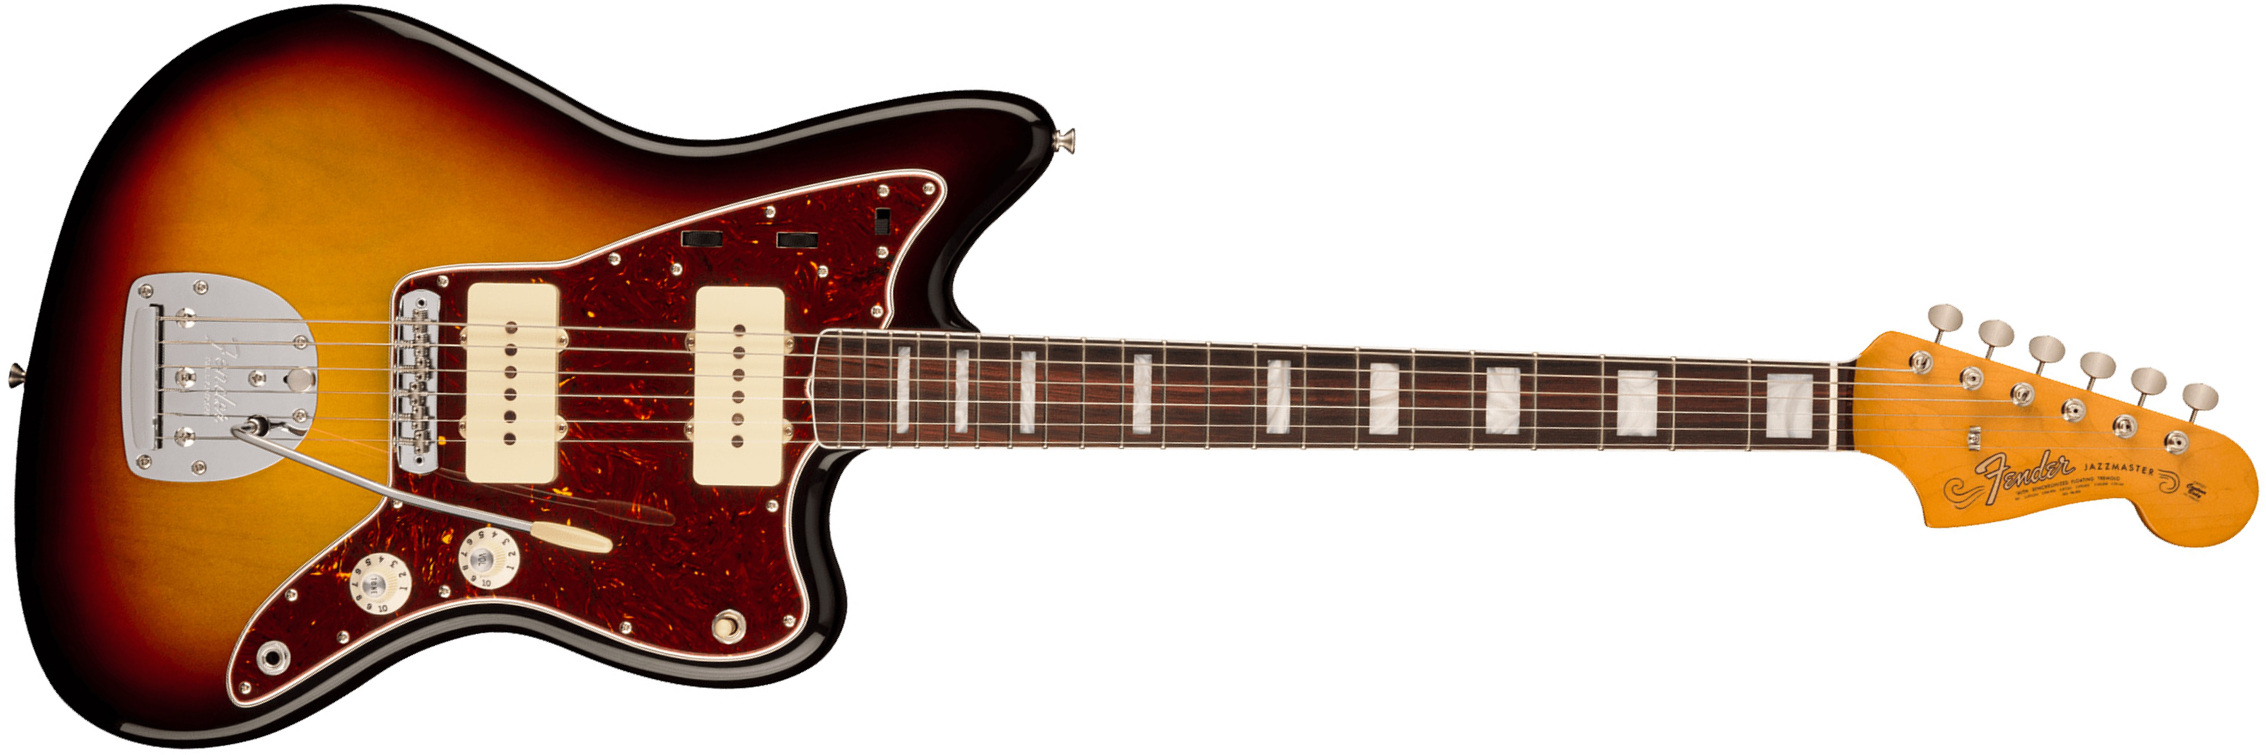 Fender Jazzmaster 1966 American Vintage Ii Usa Sh Trem Rw - 3-color Sunburst - Retro rock electric guitar - Main picture